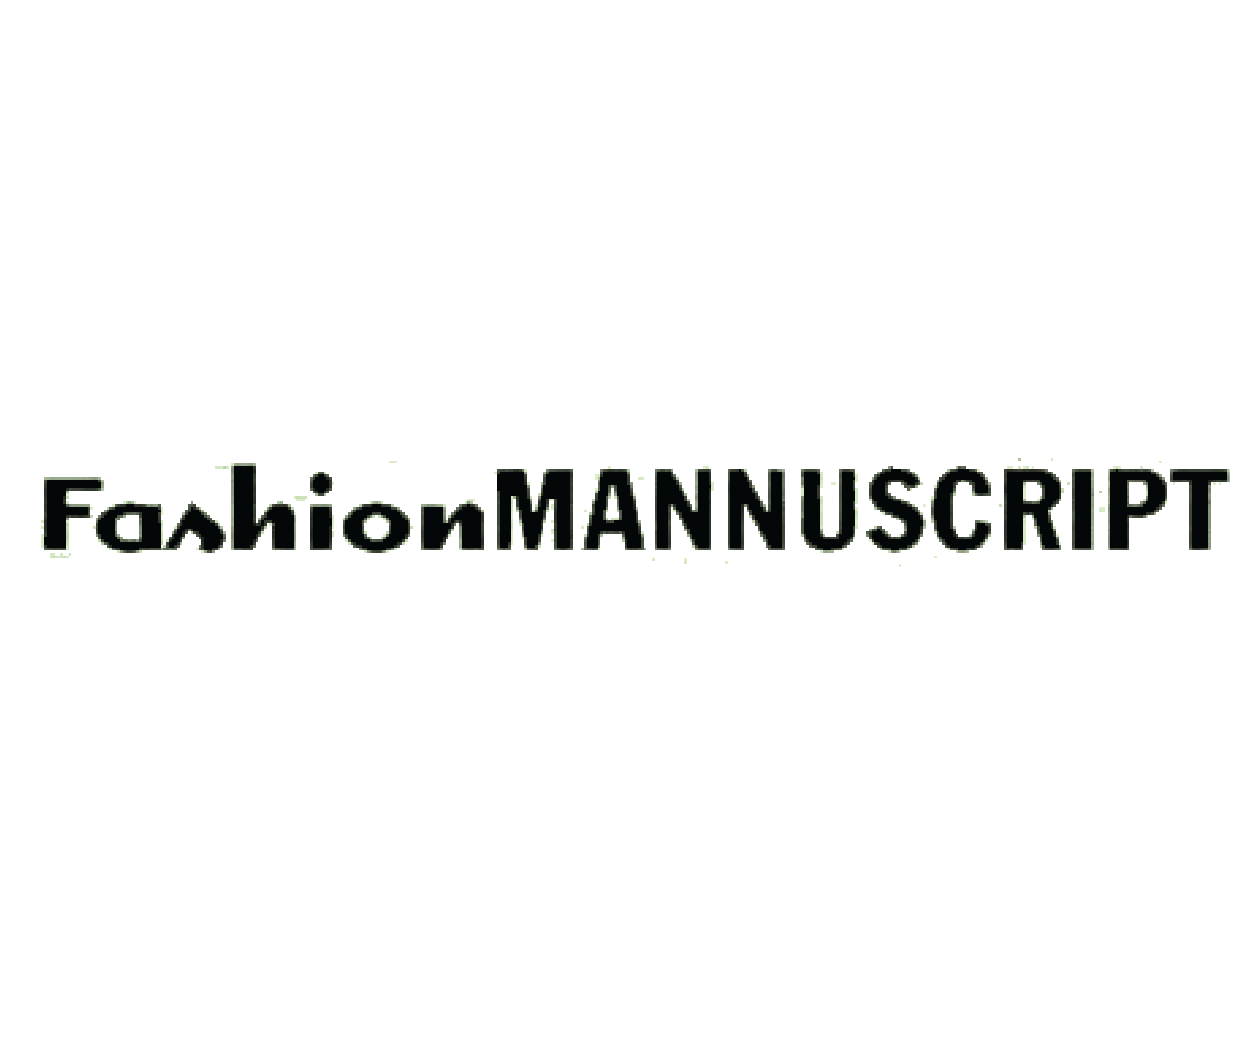 Fashion Mannuscript.png